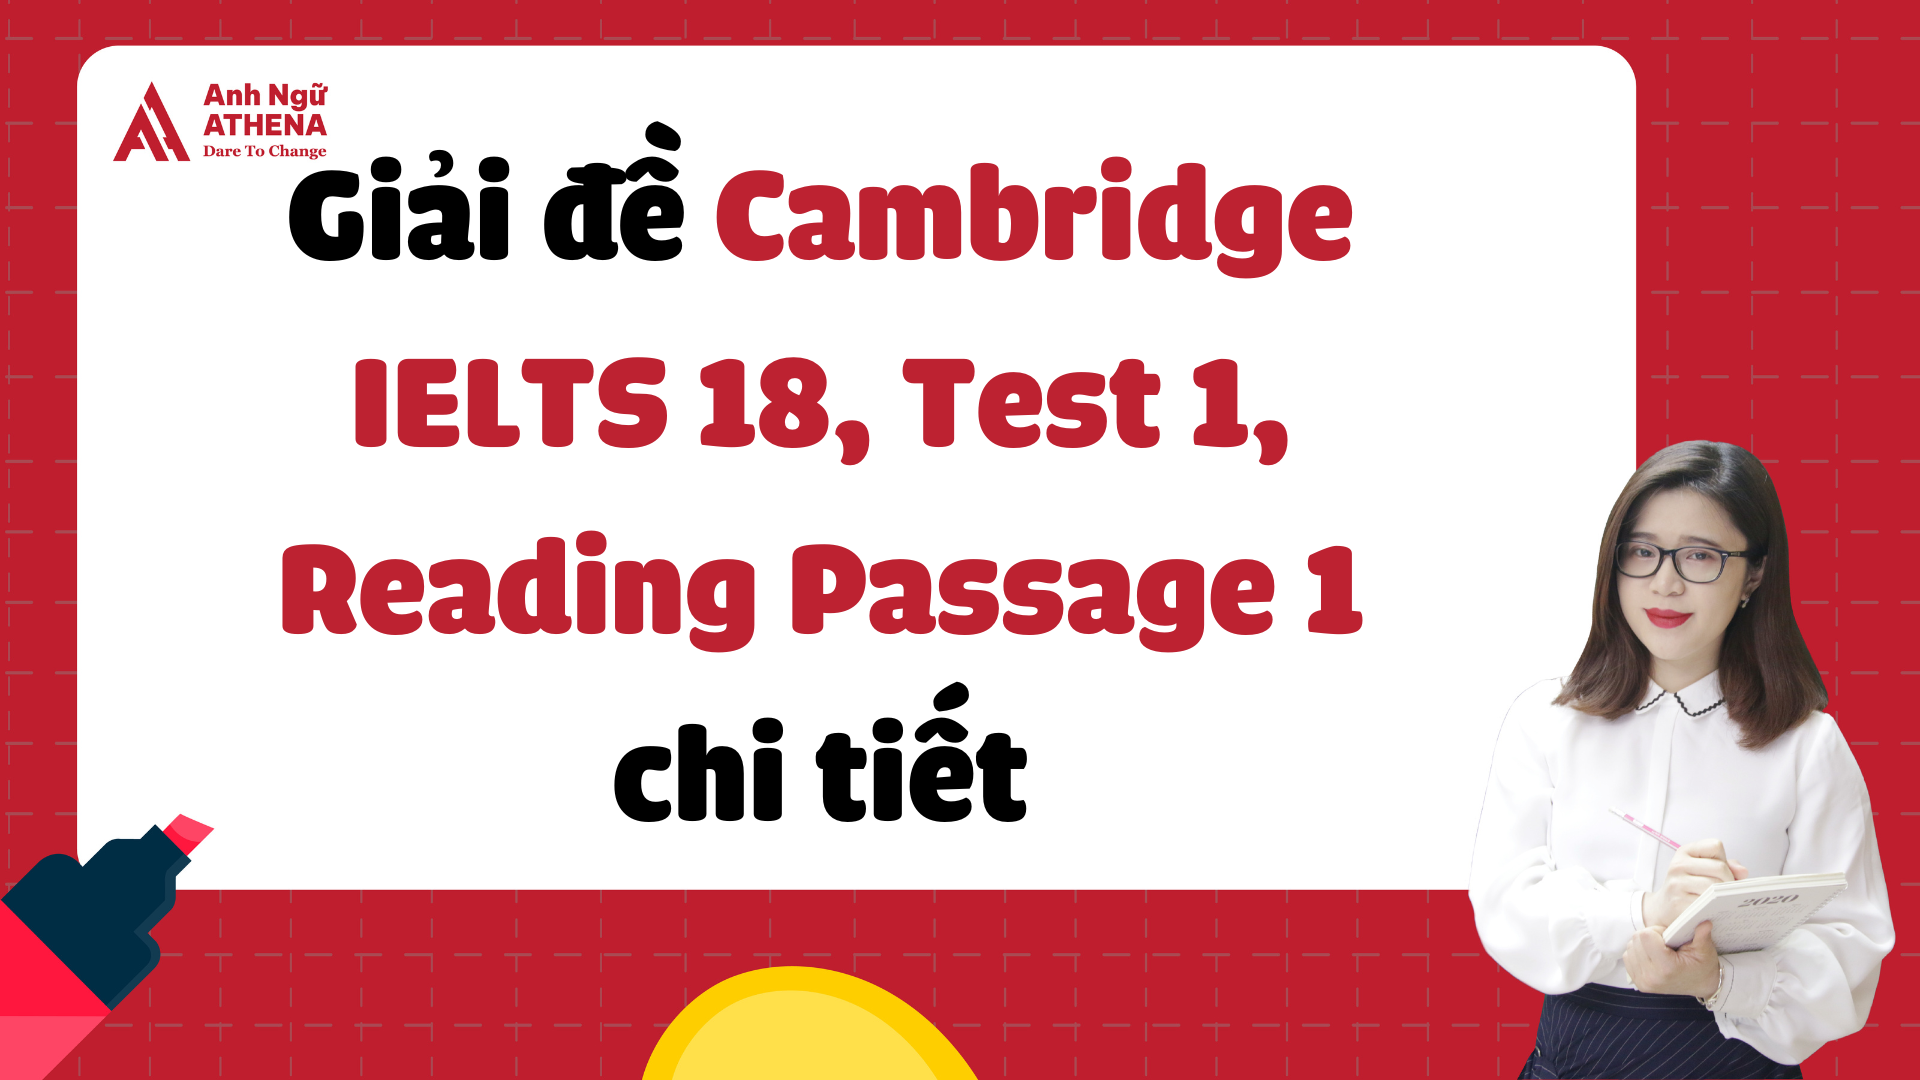 Giải đề Cambridge IELTS 18, Test 1, Reading Passage 1 chi tiết